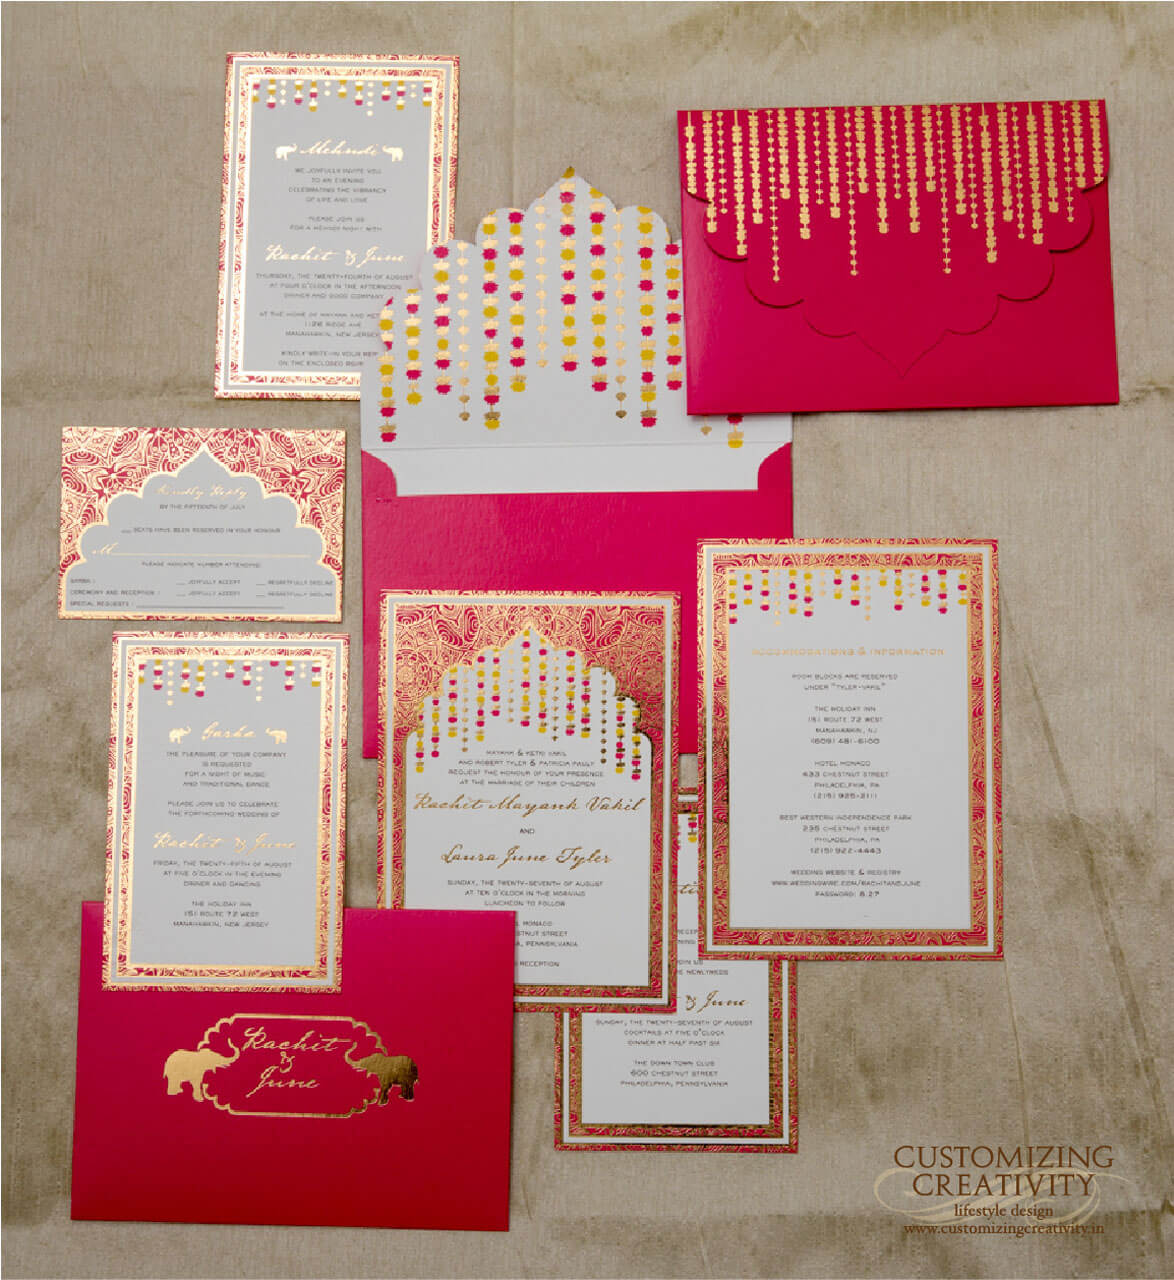 Customized Cards and Unique Wedding Invitations – Customizing Creativity